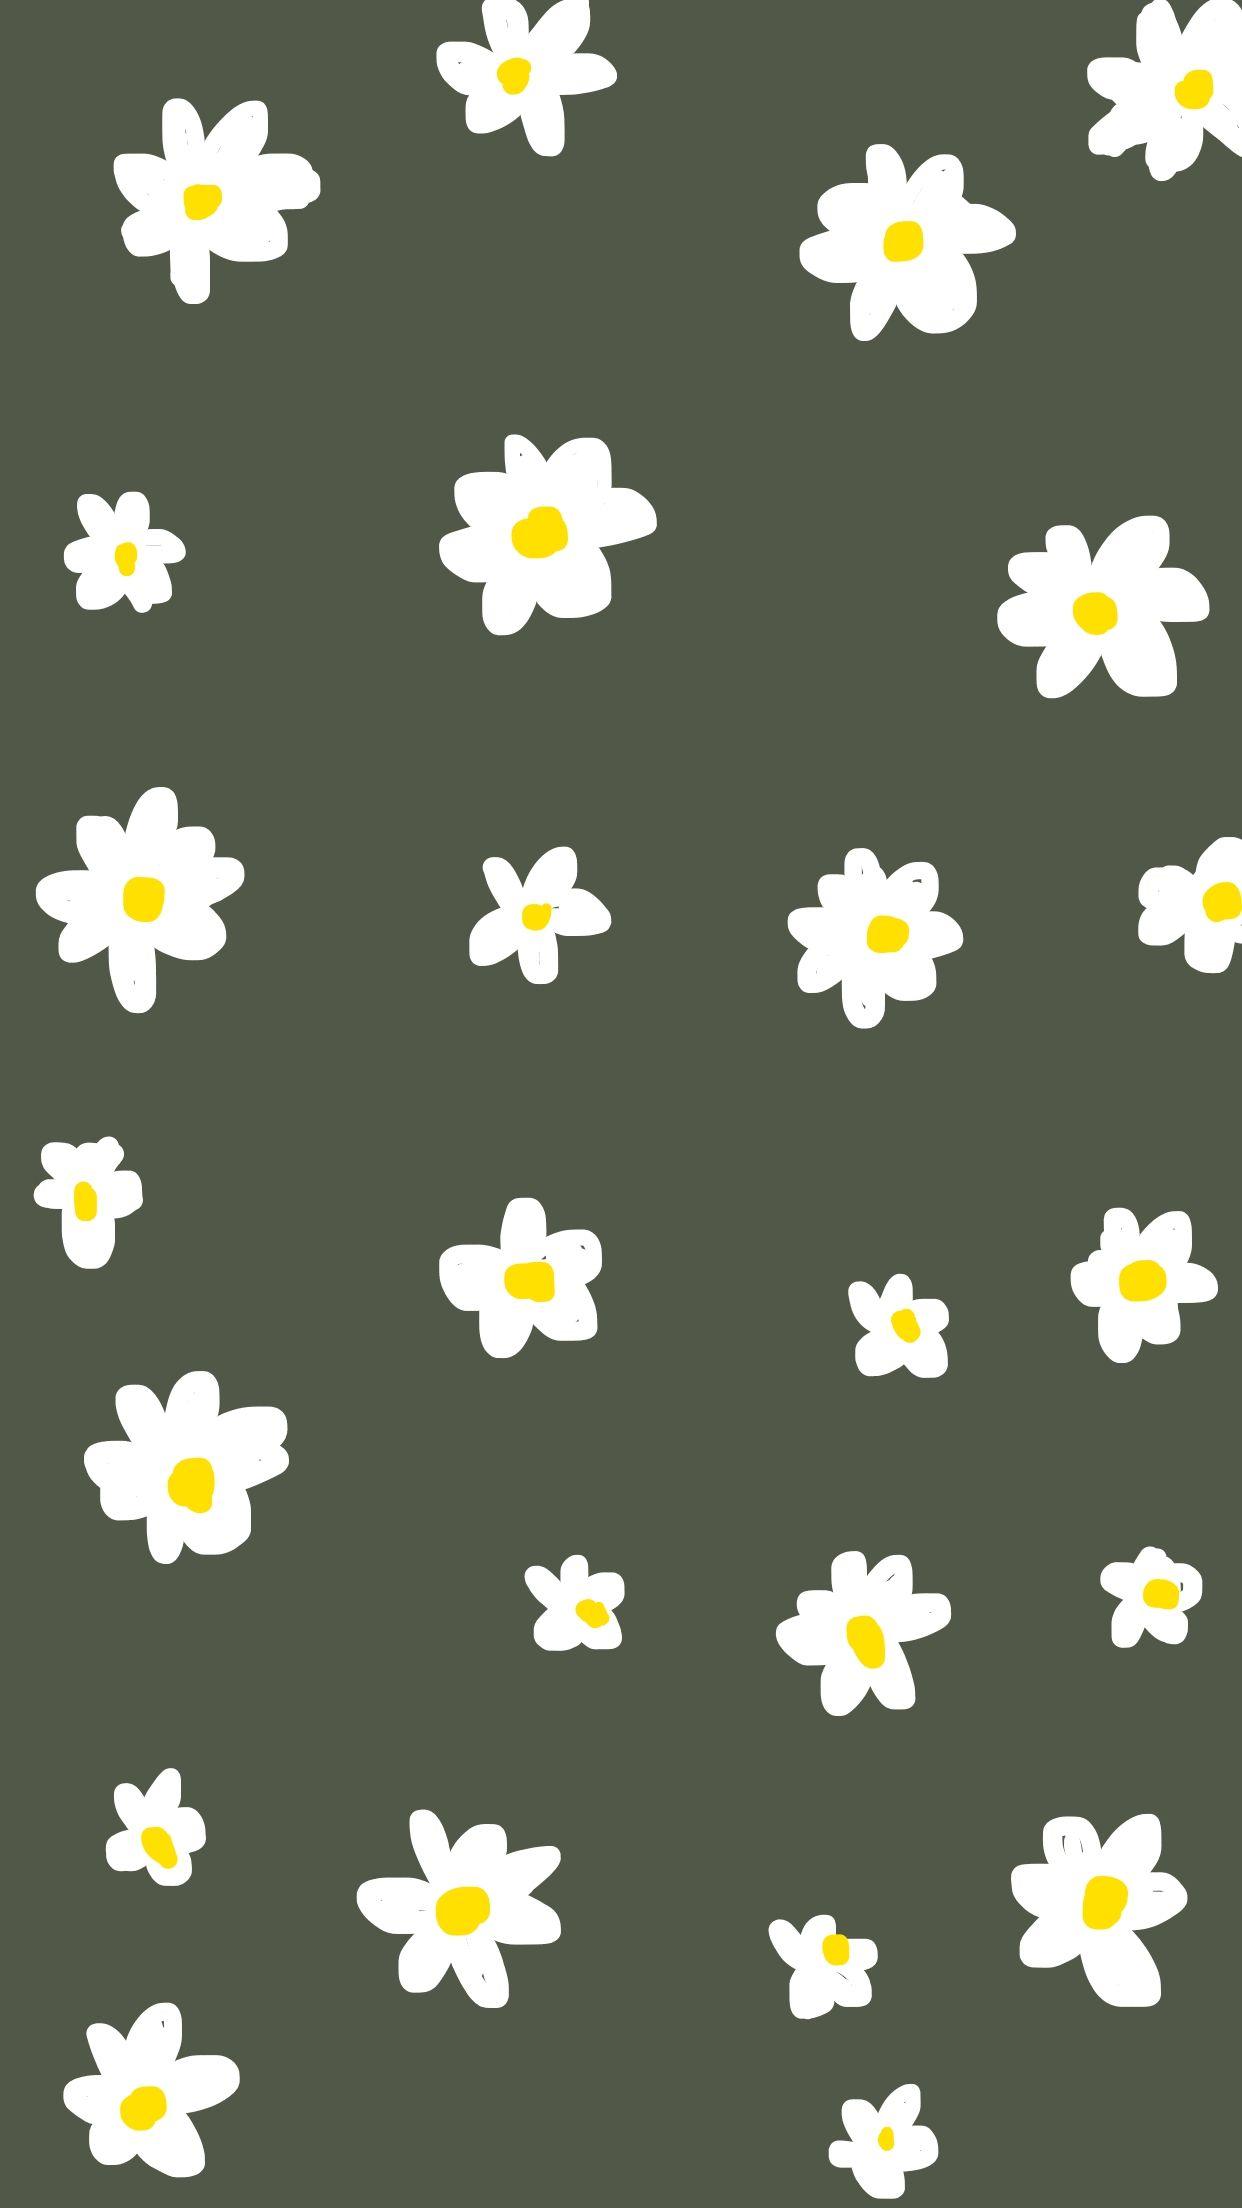 Little Flowers Wallpapers - Top Free Little Flowers Backgrounds ...